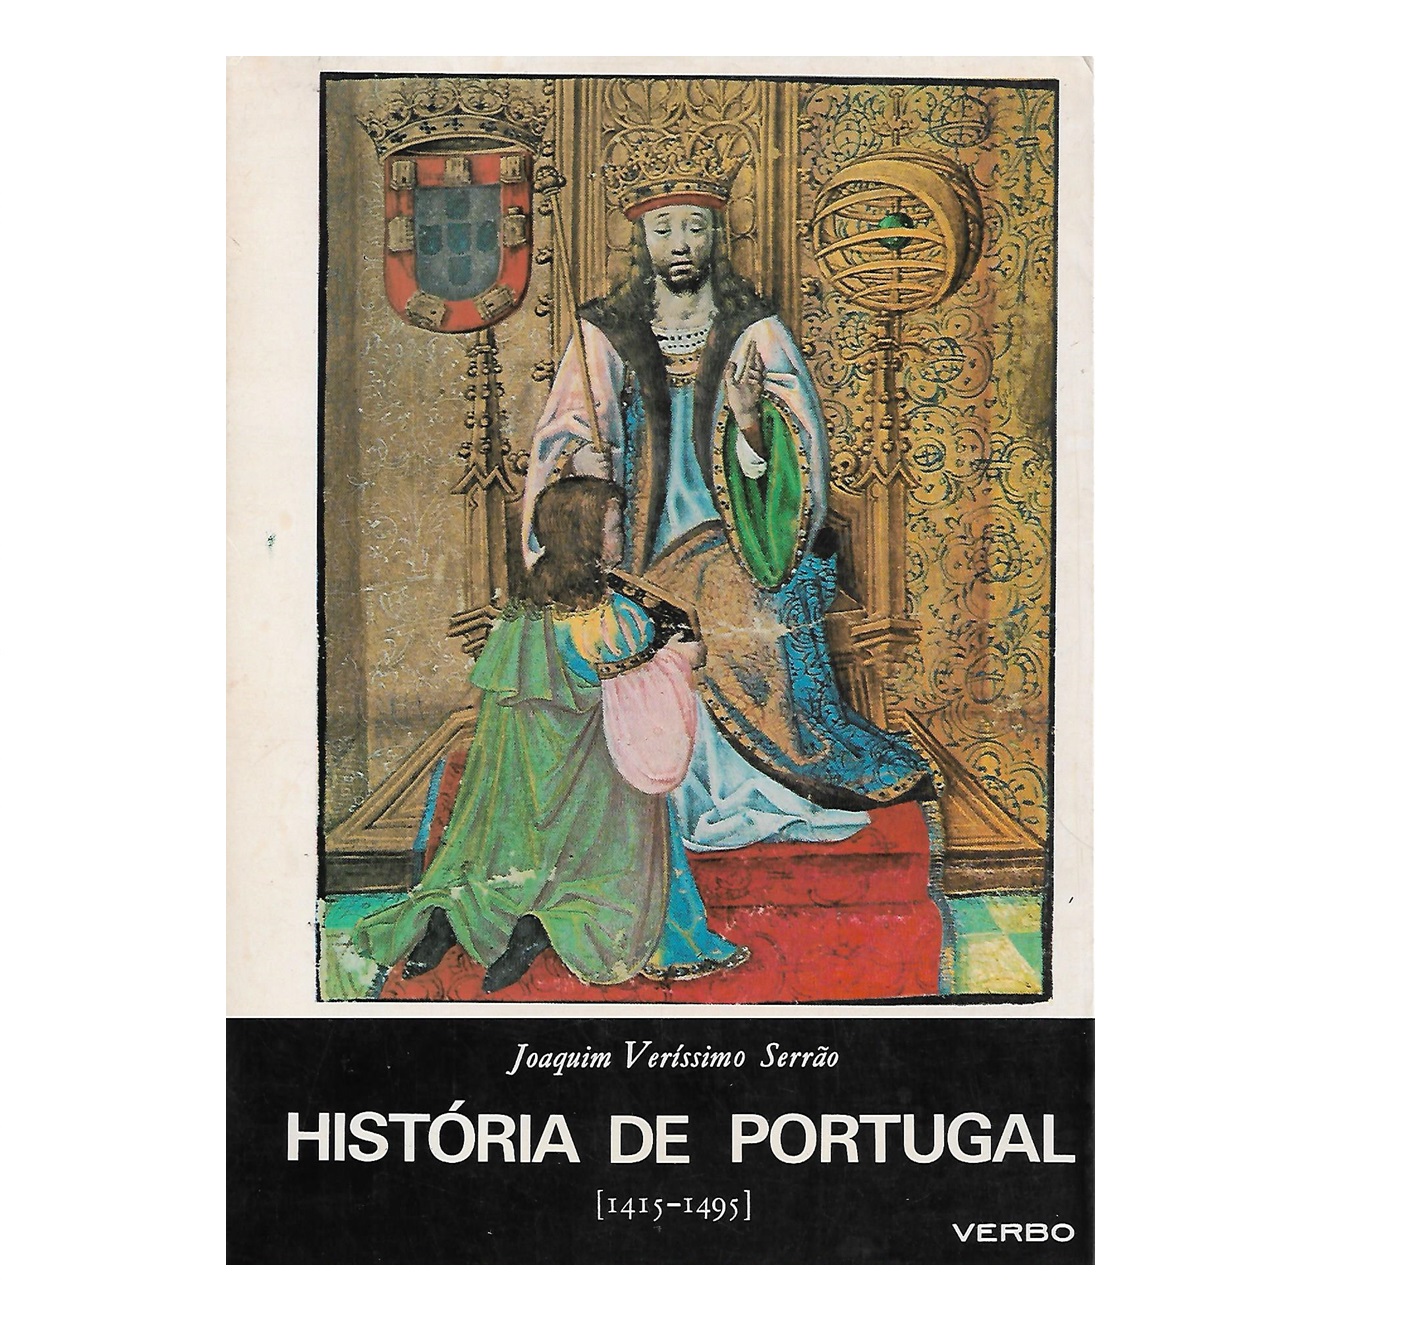  História de Portugal - Volume II (1415-1495)